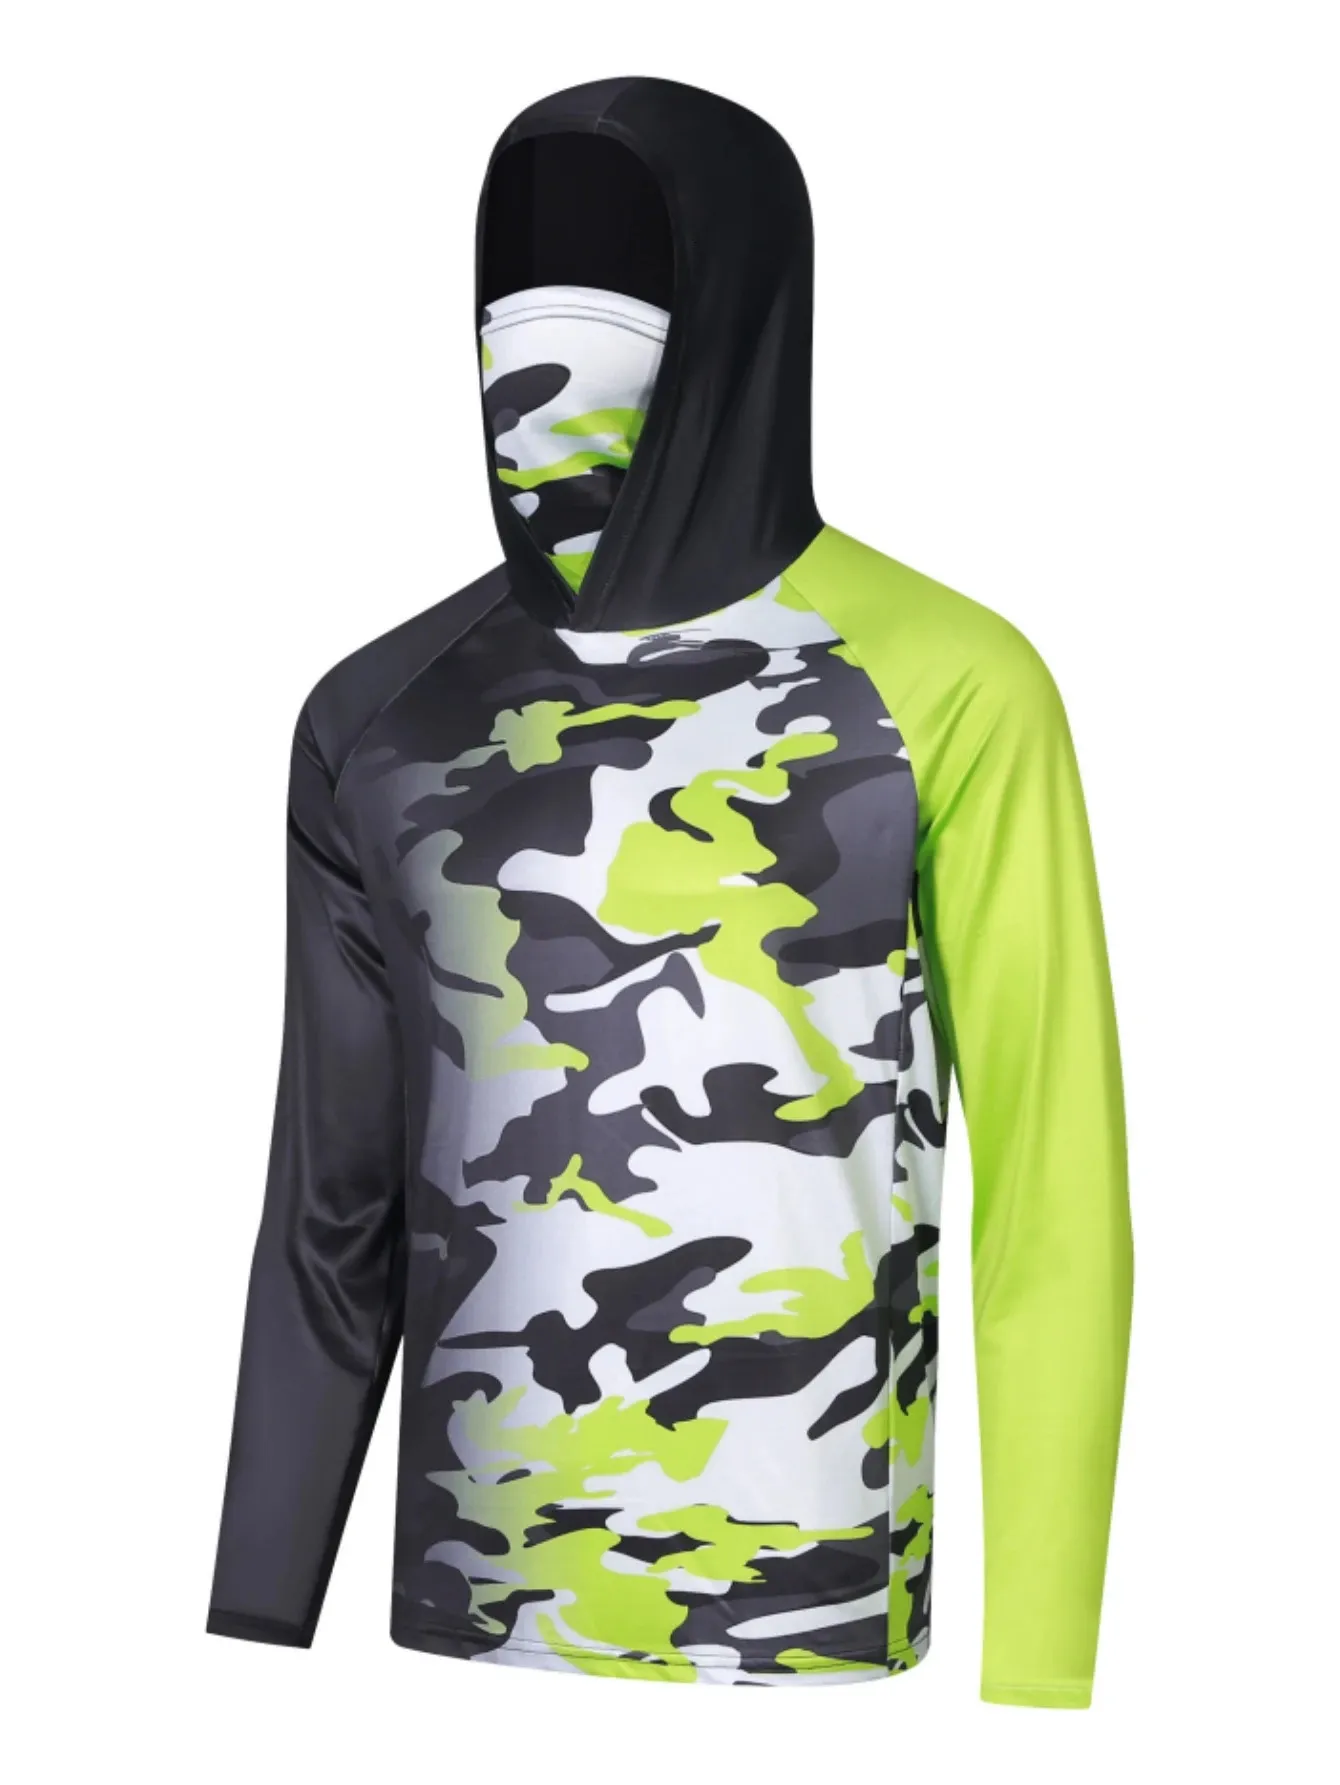 UPF50 Quick Fishing Shirt Long Sleeve, Anti UV, Summer Gear For Fishing  231123 From Pong05, $11.08